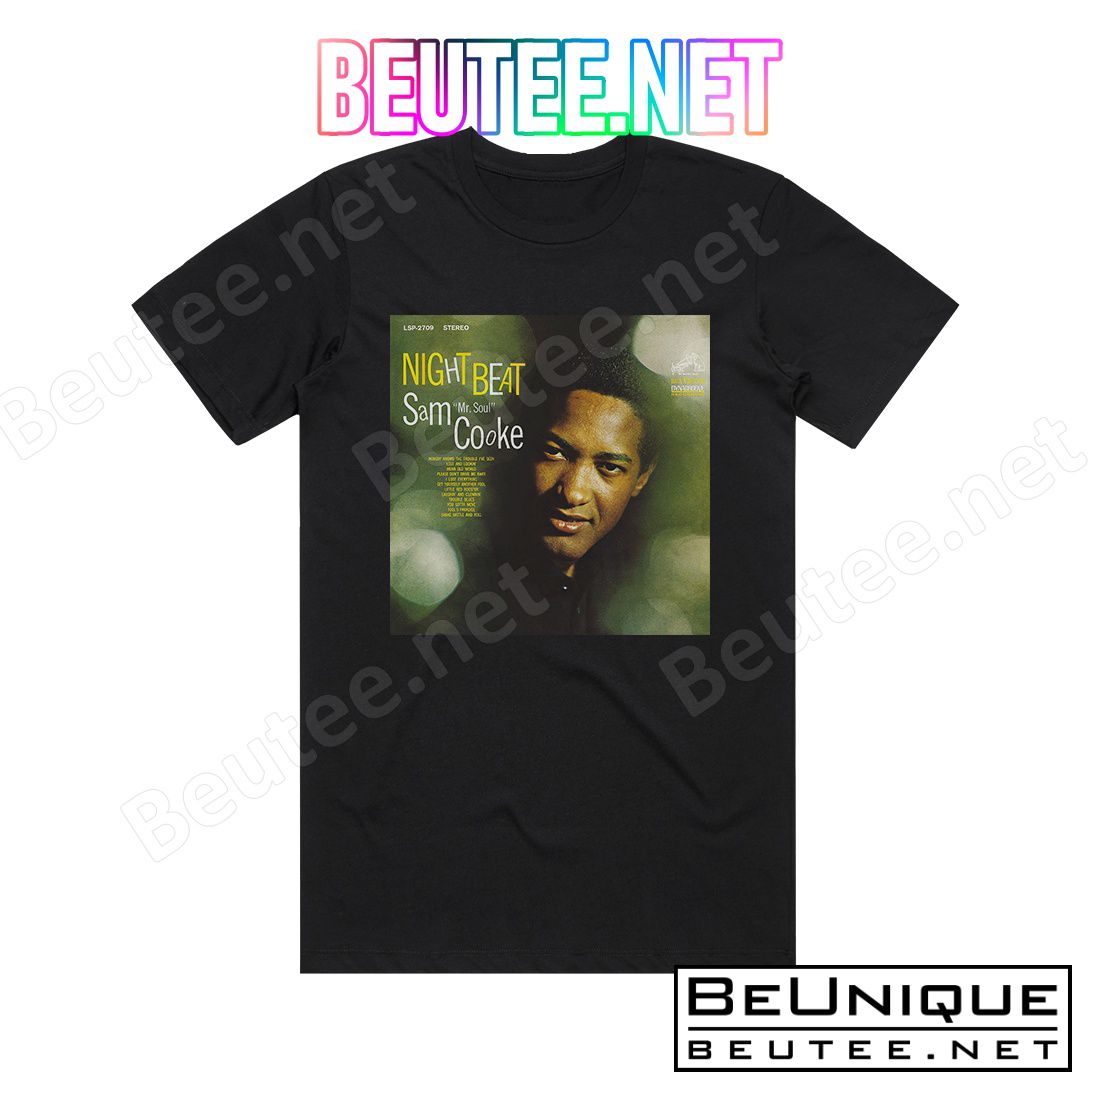 Sam Cooke Night Beat 1 Album Cover T-Shirt